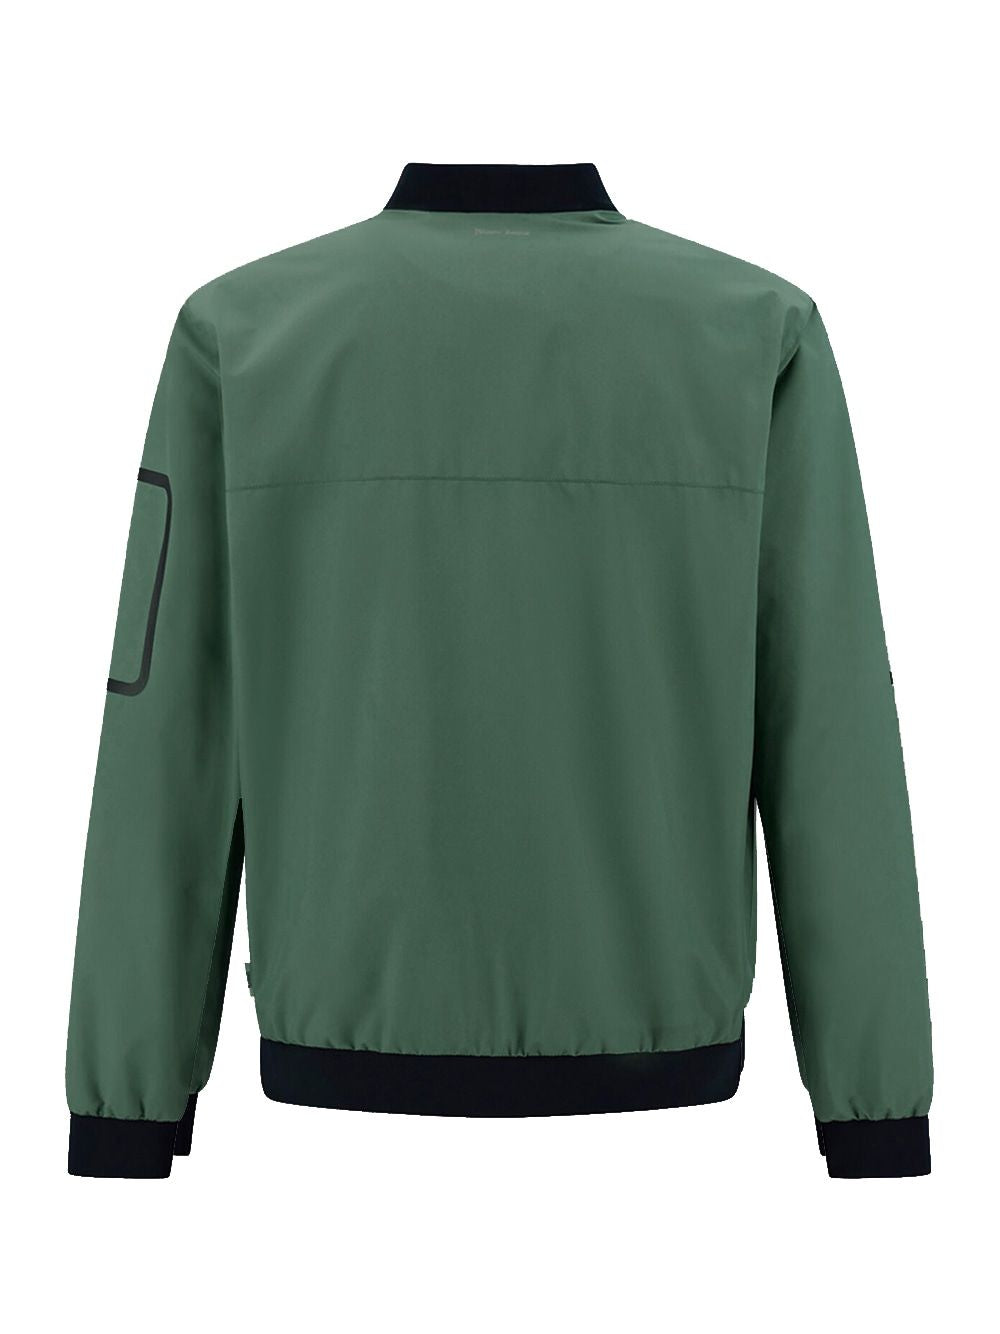 HERNO Green Zip Pocket Bomber Jacket for Men